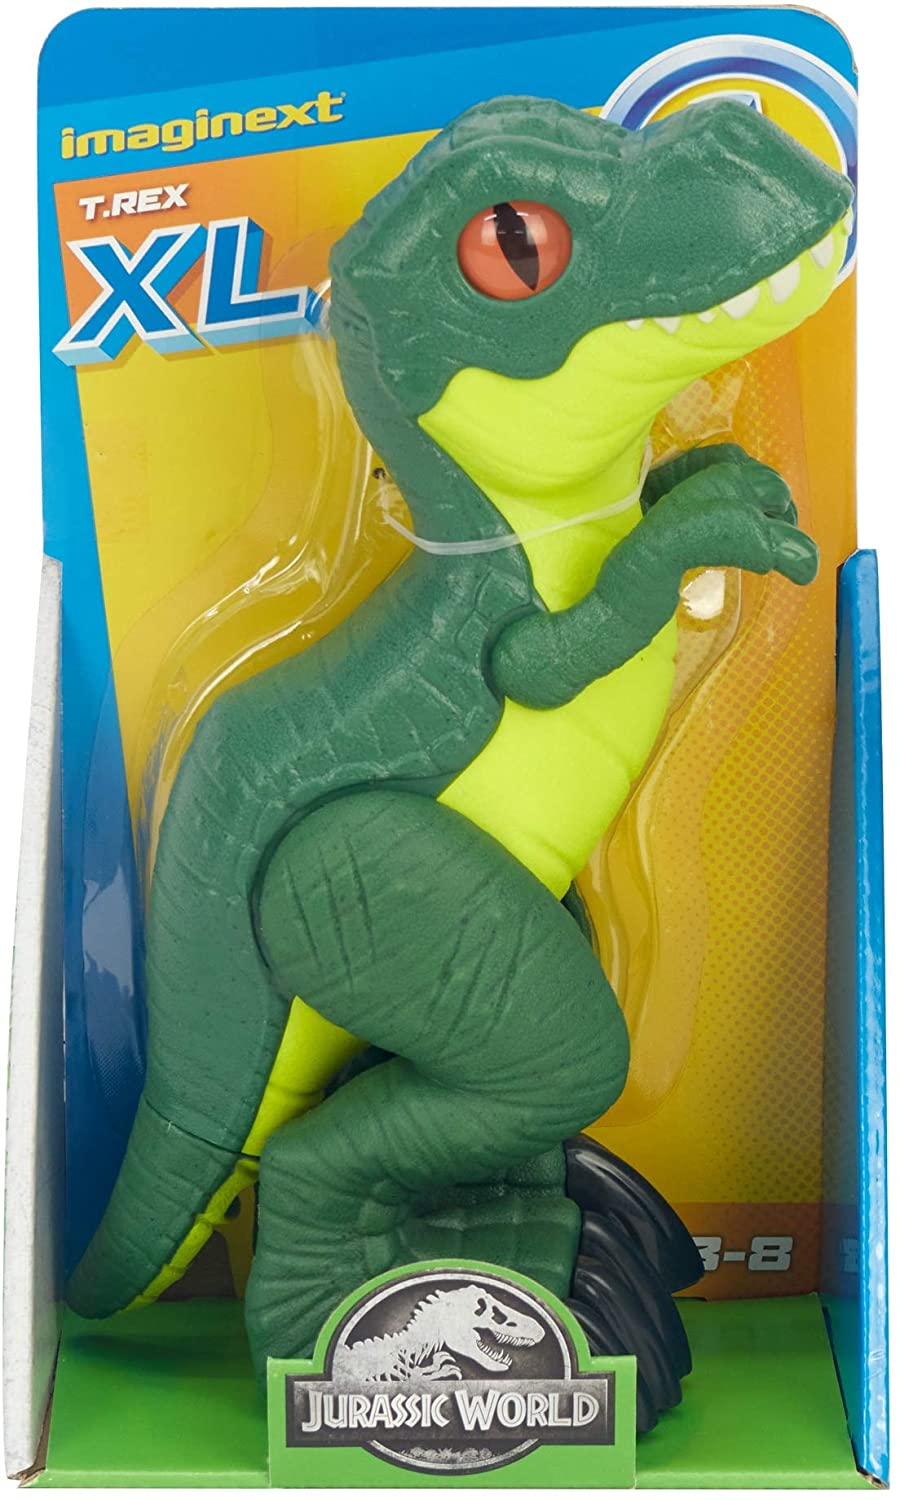 Imaginext Jurassic World T-Rex Xl